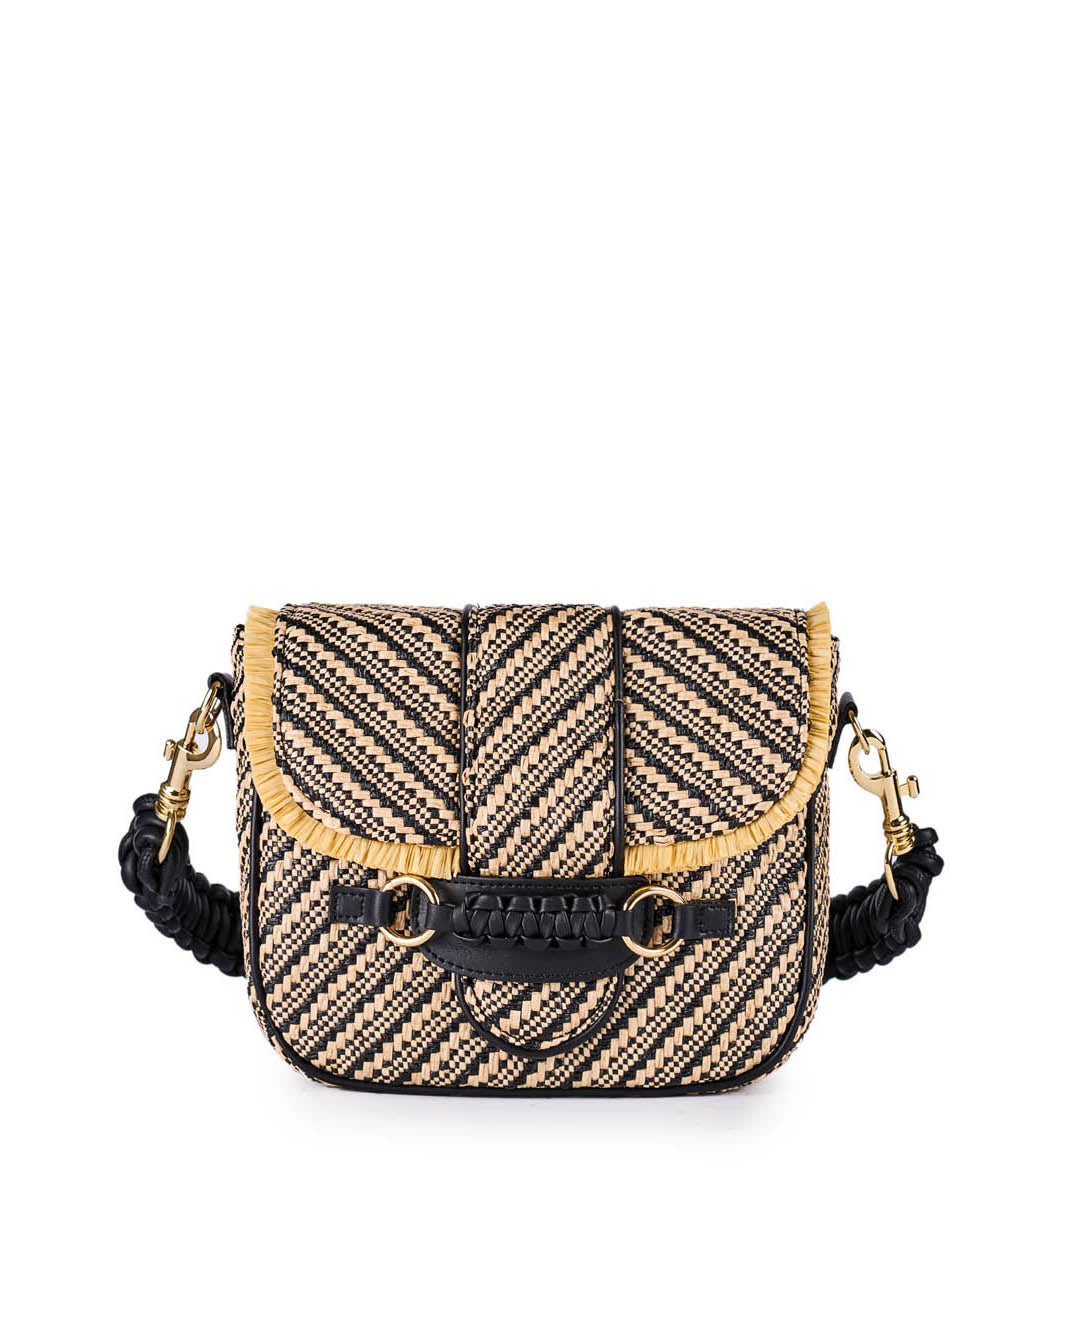 Stylish woven handbag with black and beige diagonal stripes